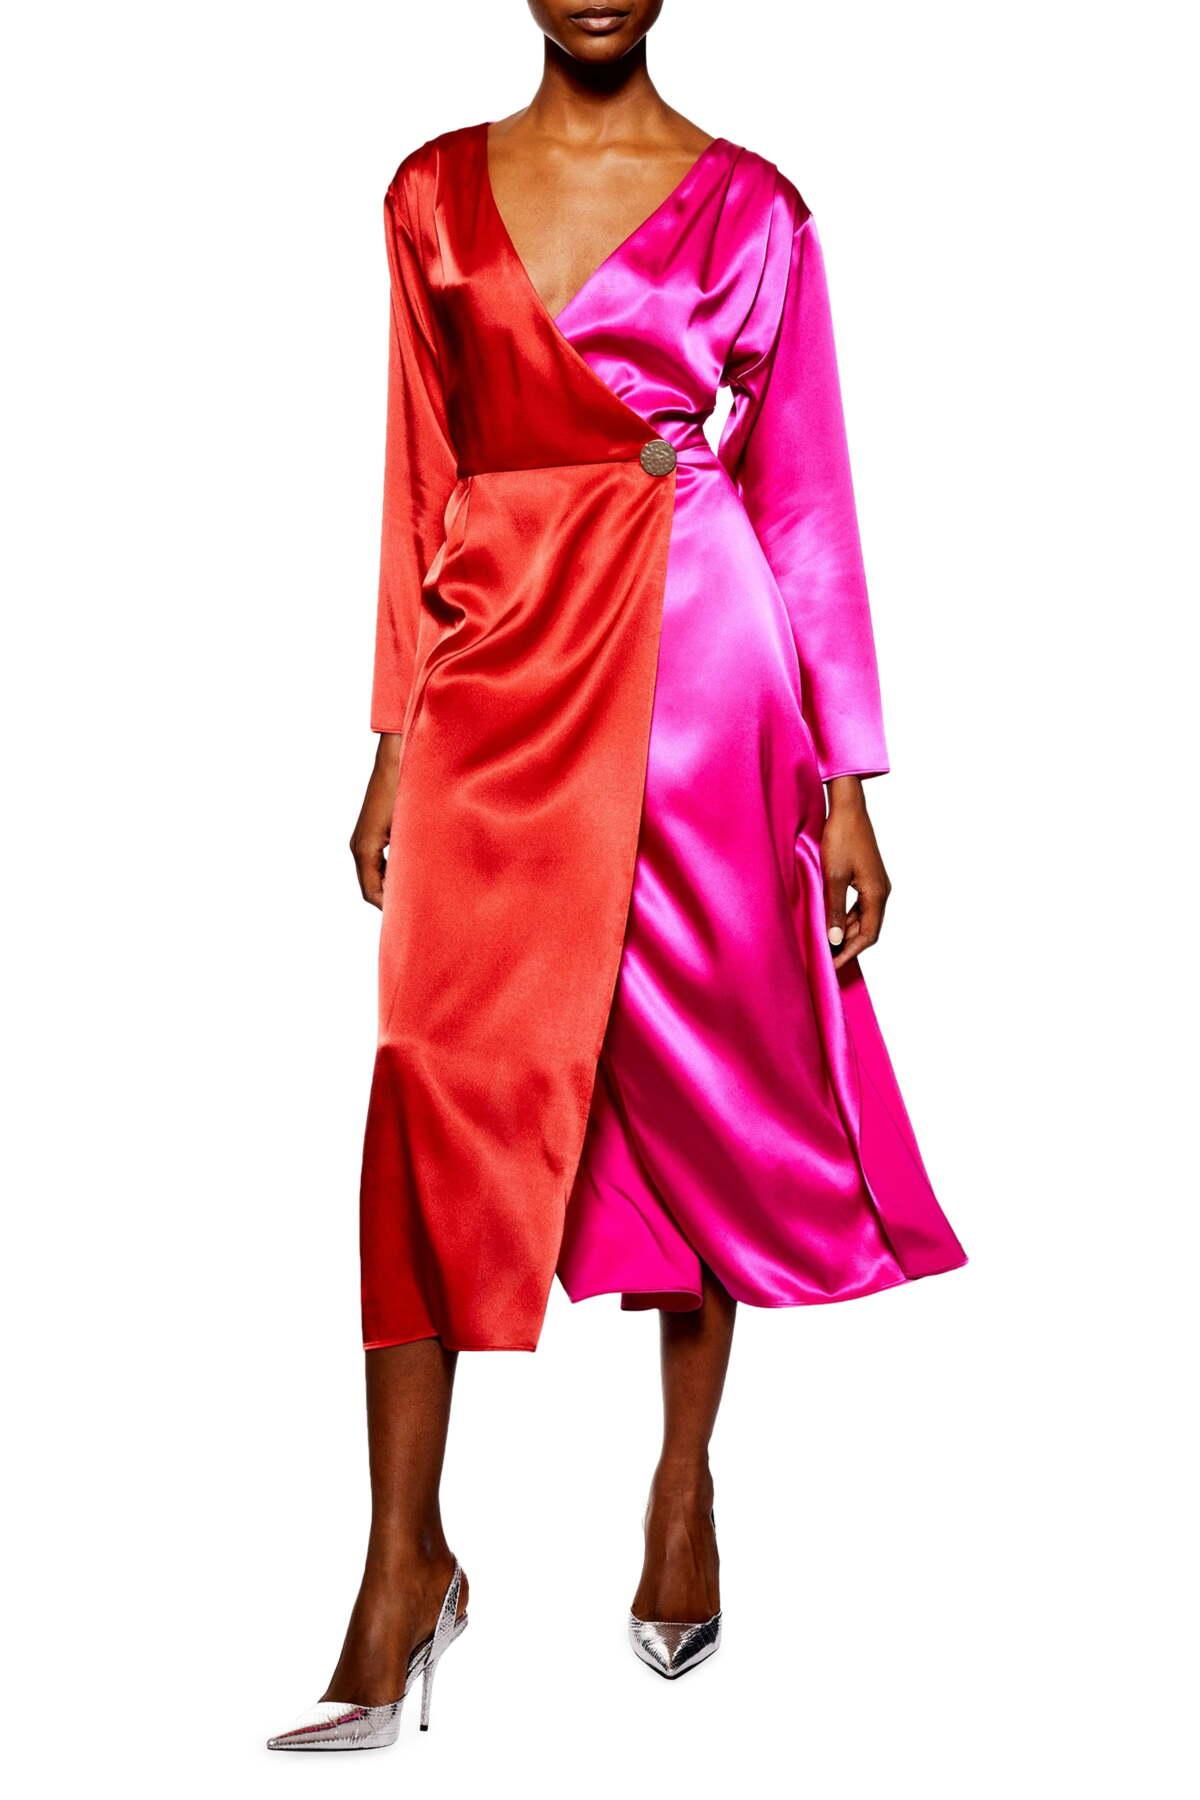 TOPSHOP Colorblock Dress in Pink